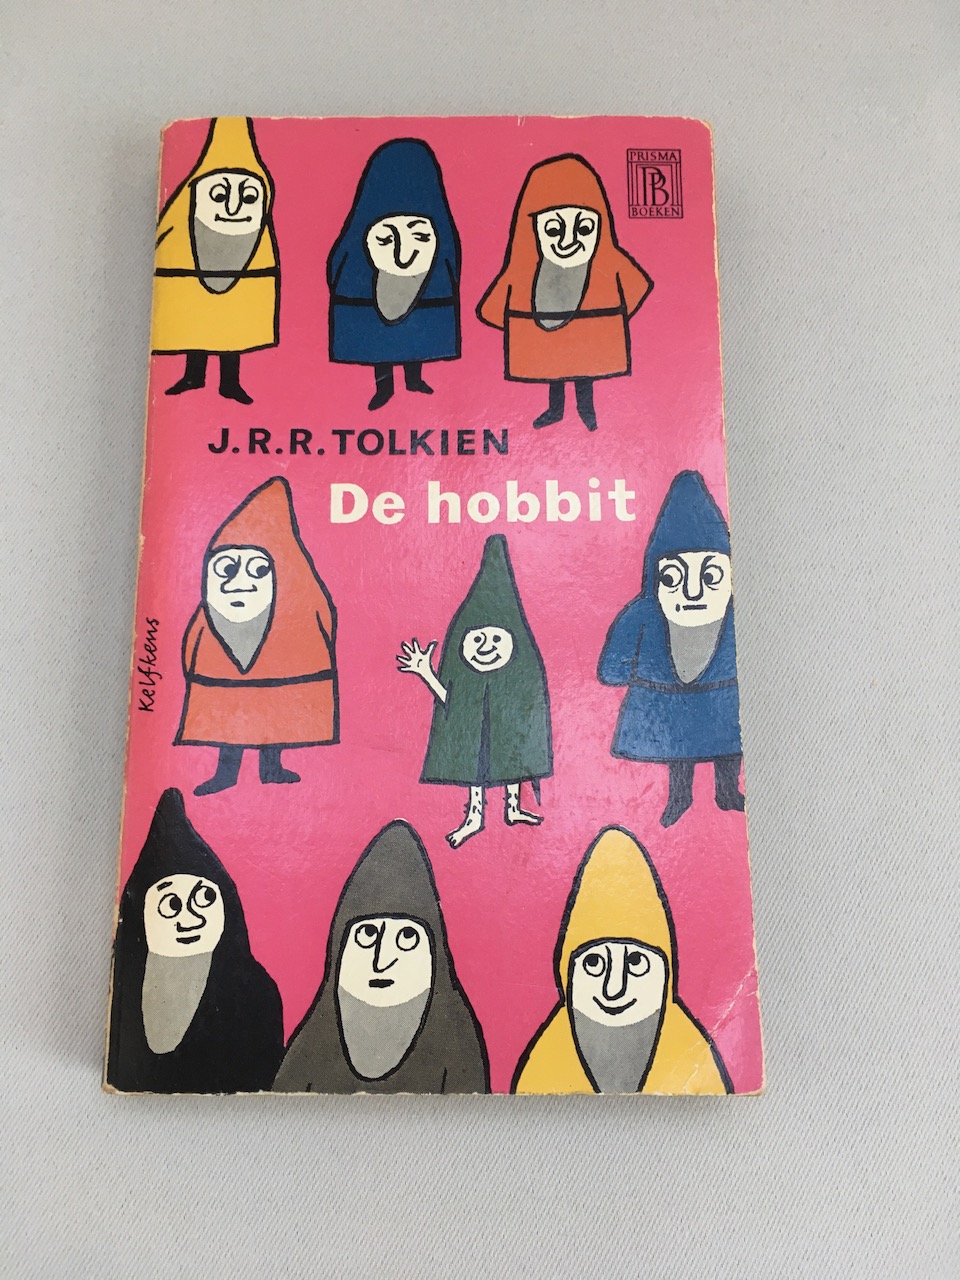 J.R.R. Tolkien, De Hobbit, Dutch, paperback, 1960, 1st printing